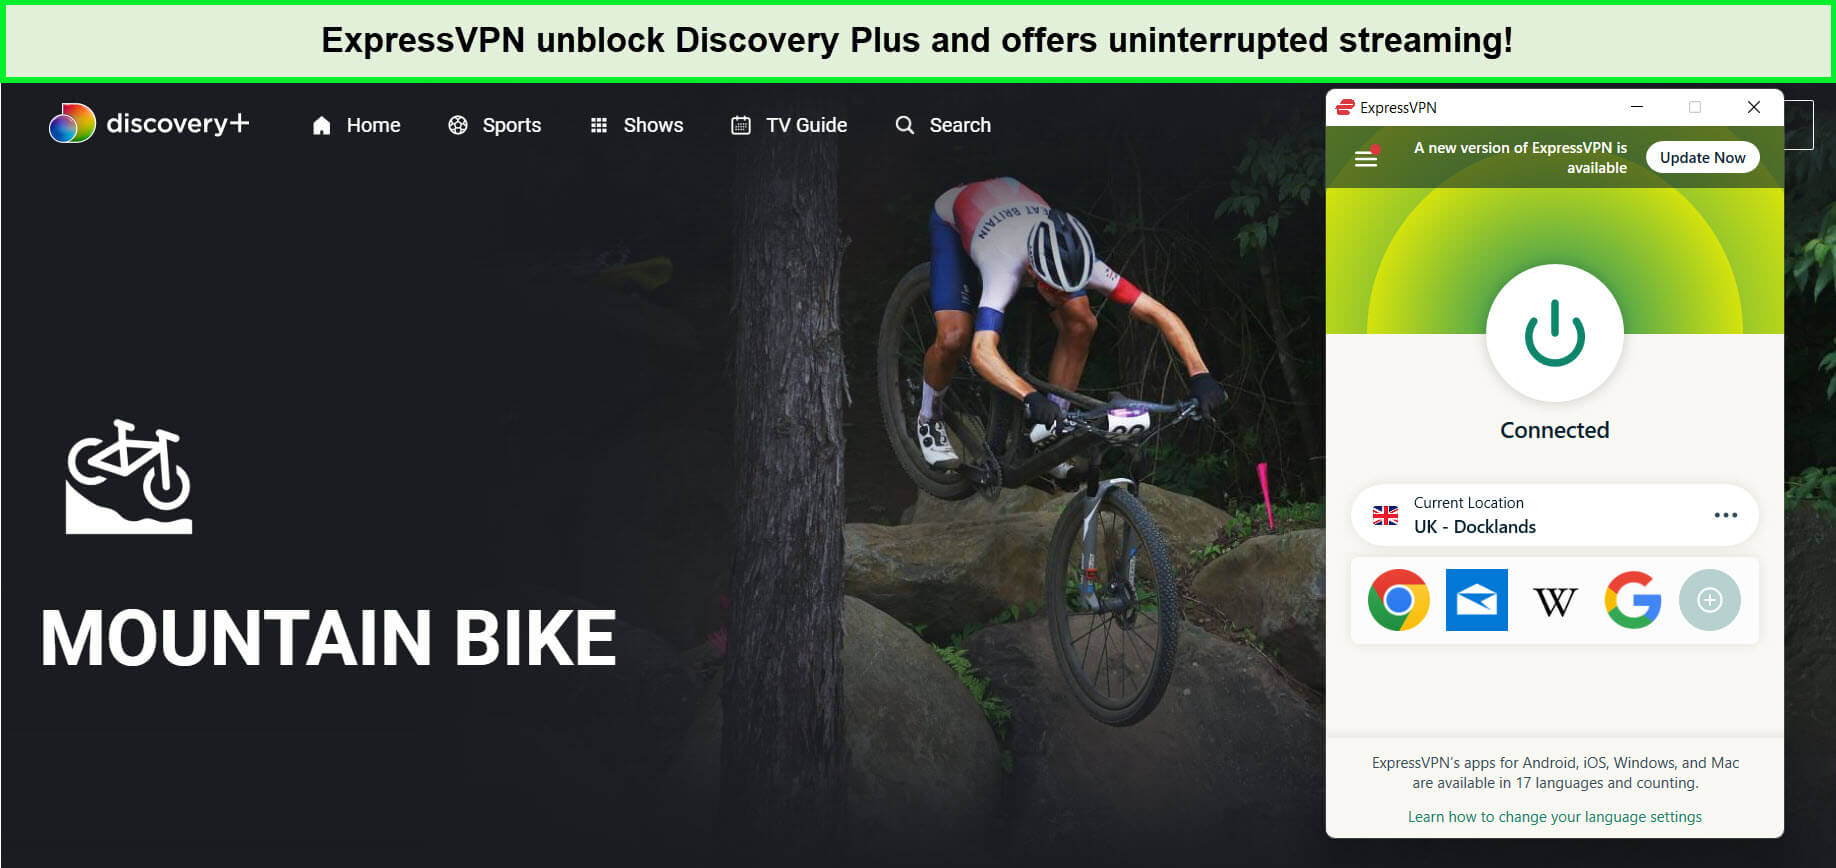 expressvpn-unblocks-uci-mountain-bike-world-series-in-Australia-on-discovery-plus